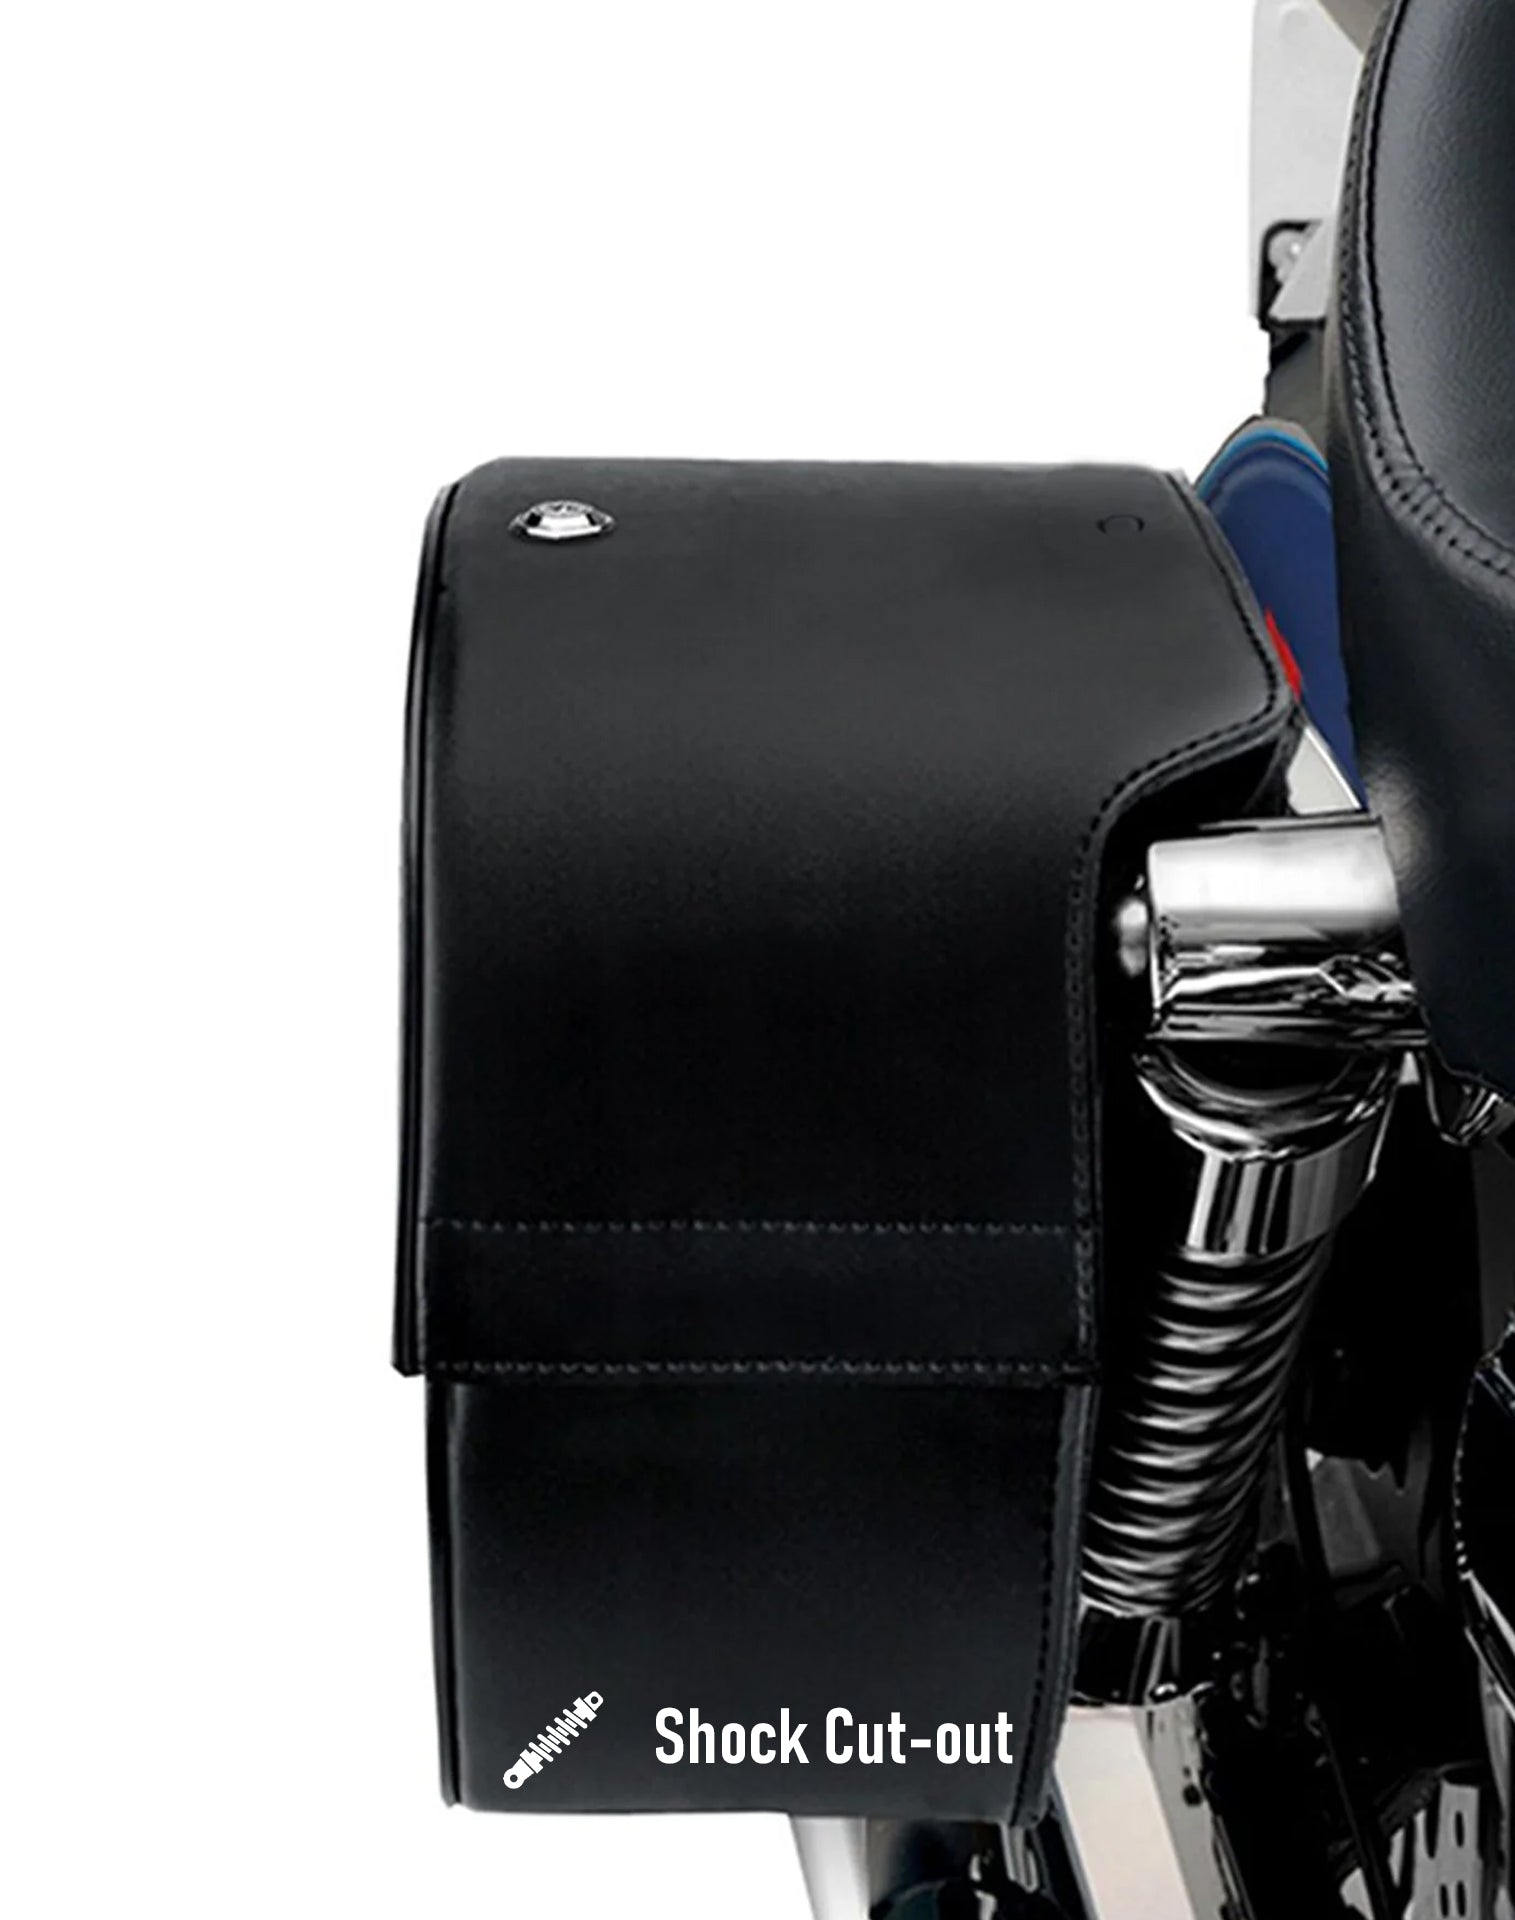 Viking Skarner Large Honda Shadow 750 Rs Shock Cut Out Leather Motorcycle Saddlebags Hard Shell Construction